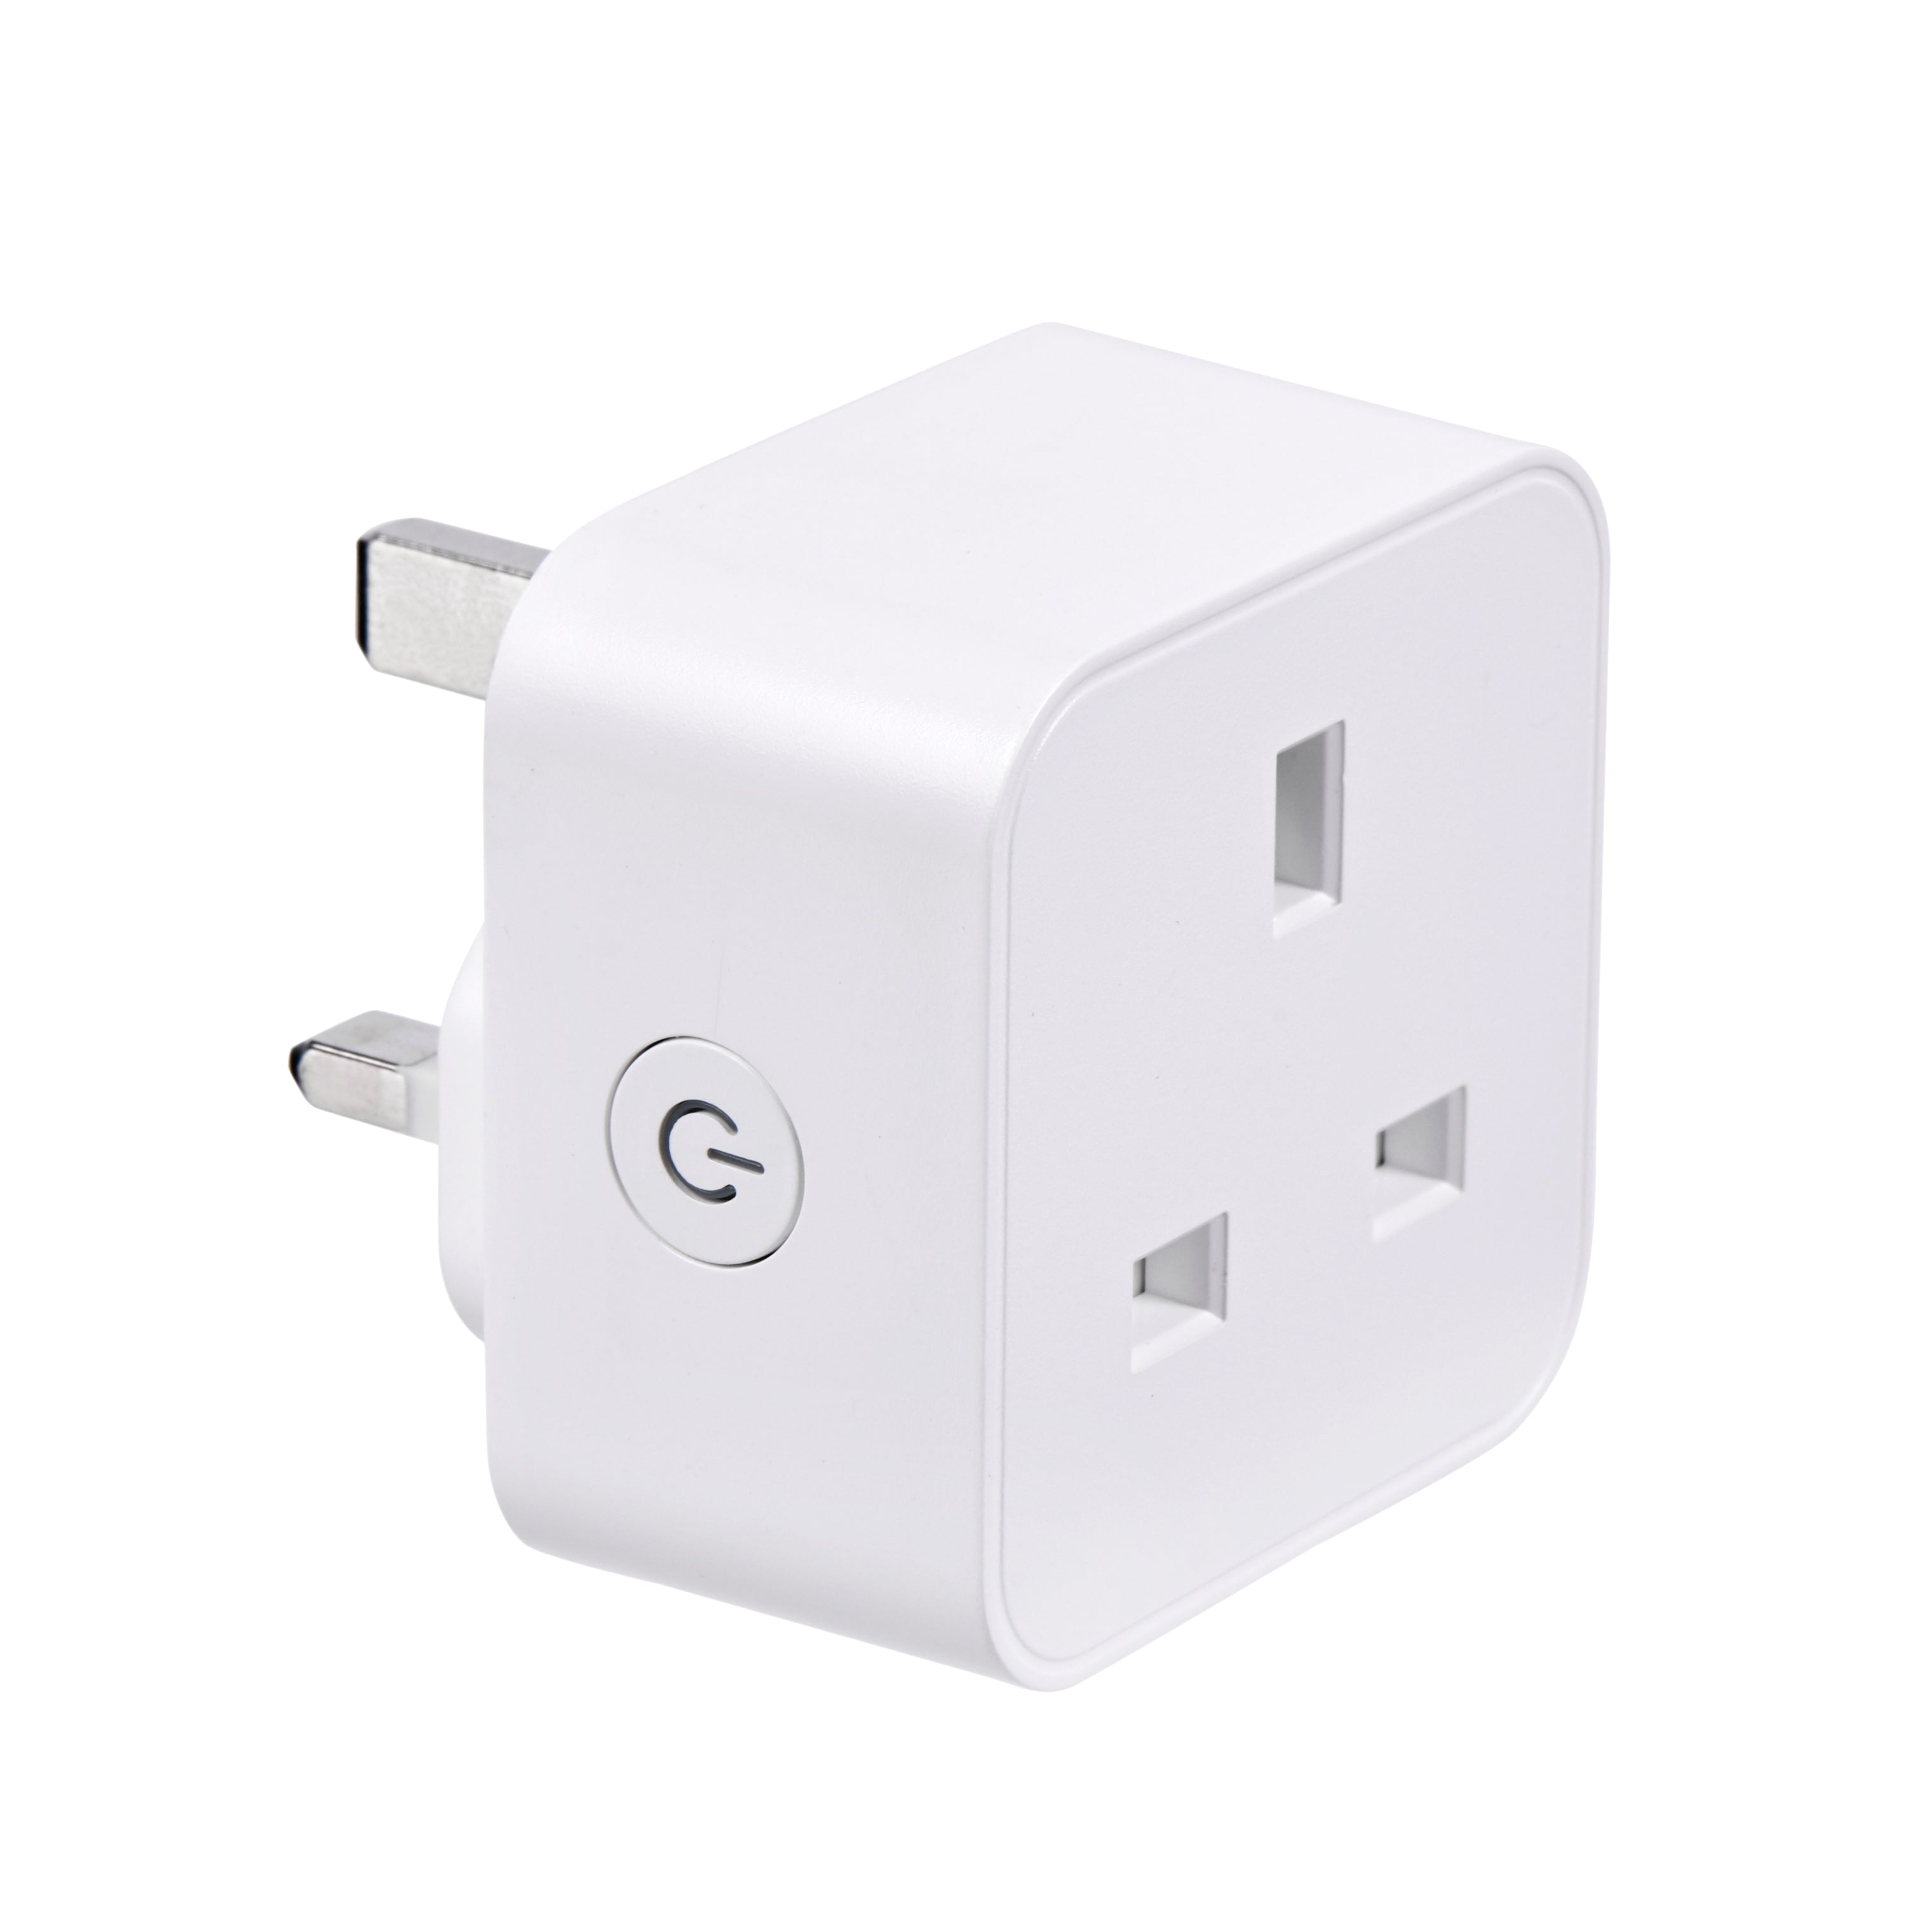 Lights4fun Smart Plug Socket Google Home Assistant Alexa Compatible Wifi Outlet